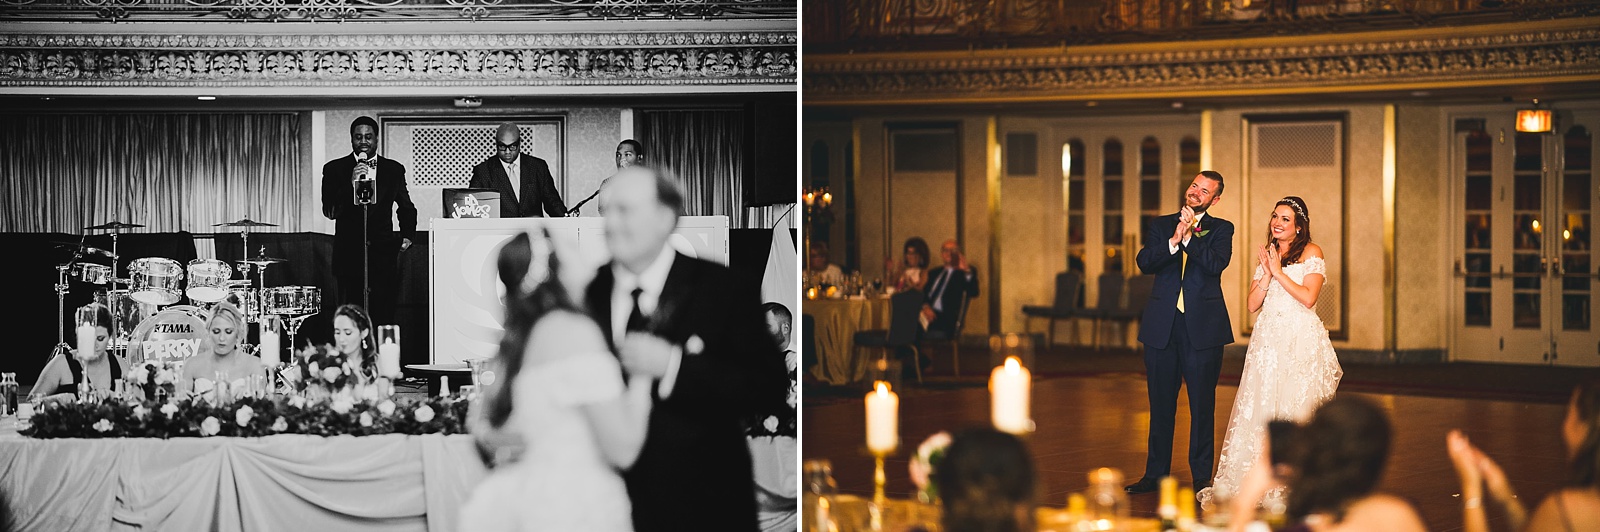 71 favorite singer at wedding - Hilton Chicago Wedding Photographer // Sarah + Aaron